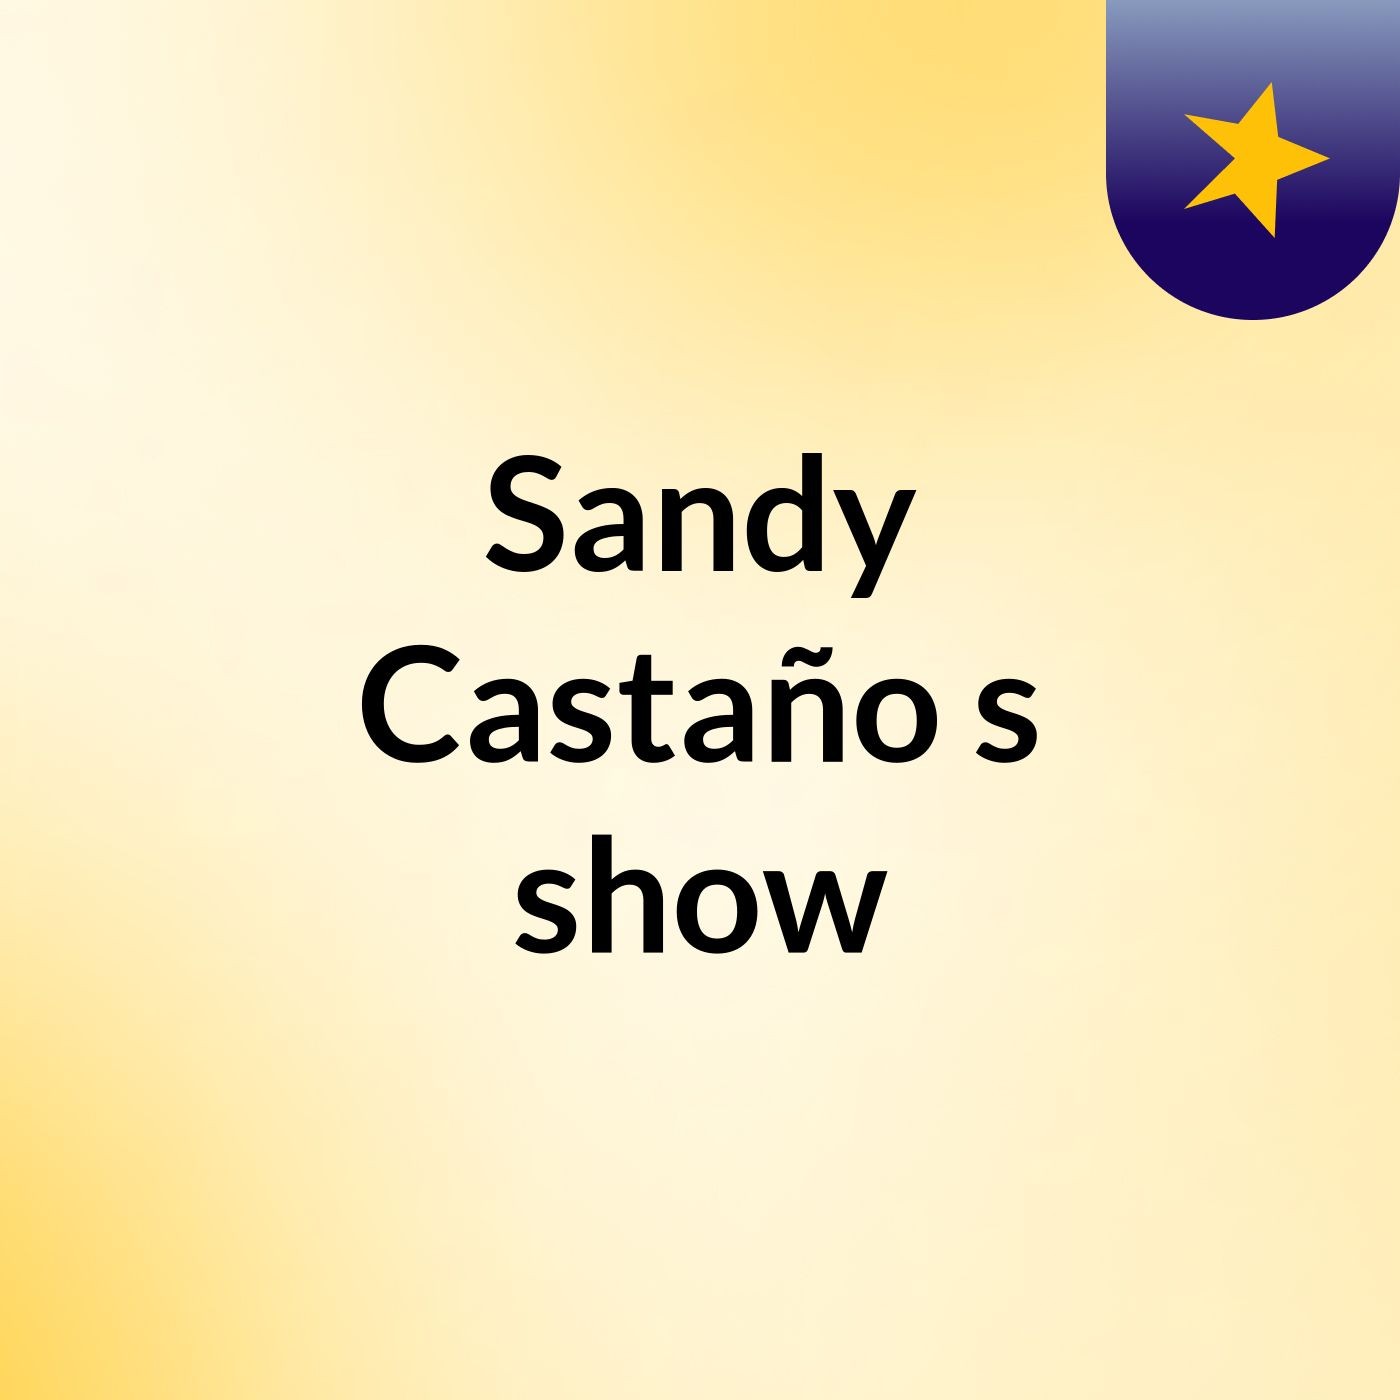 Sandy Castaño's show